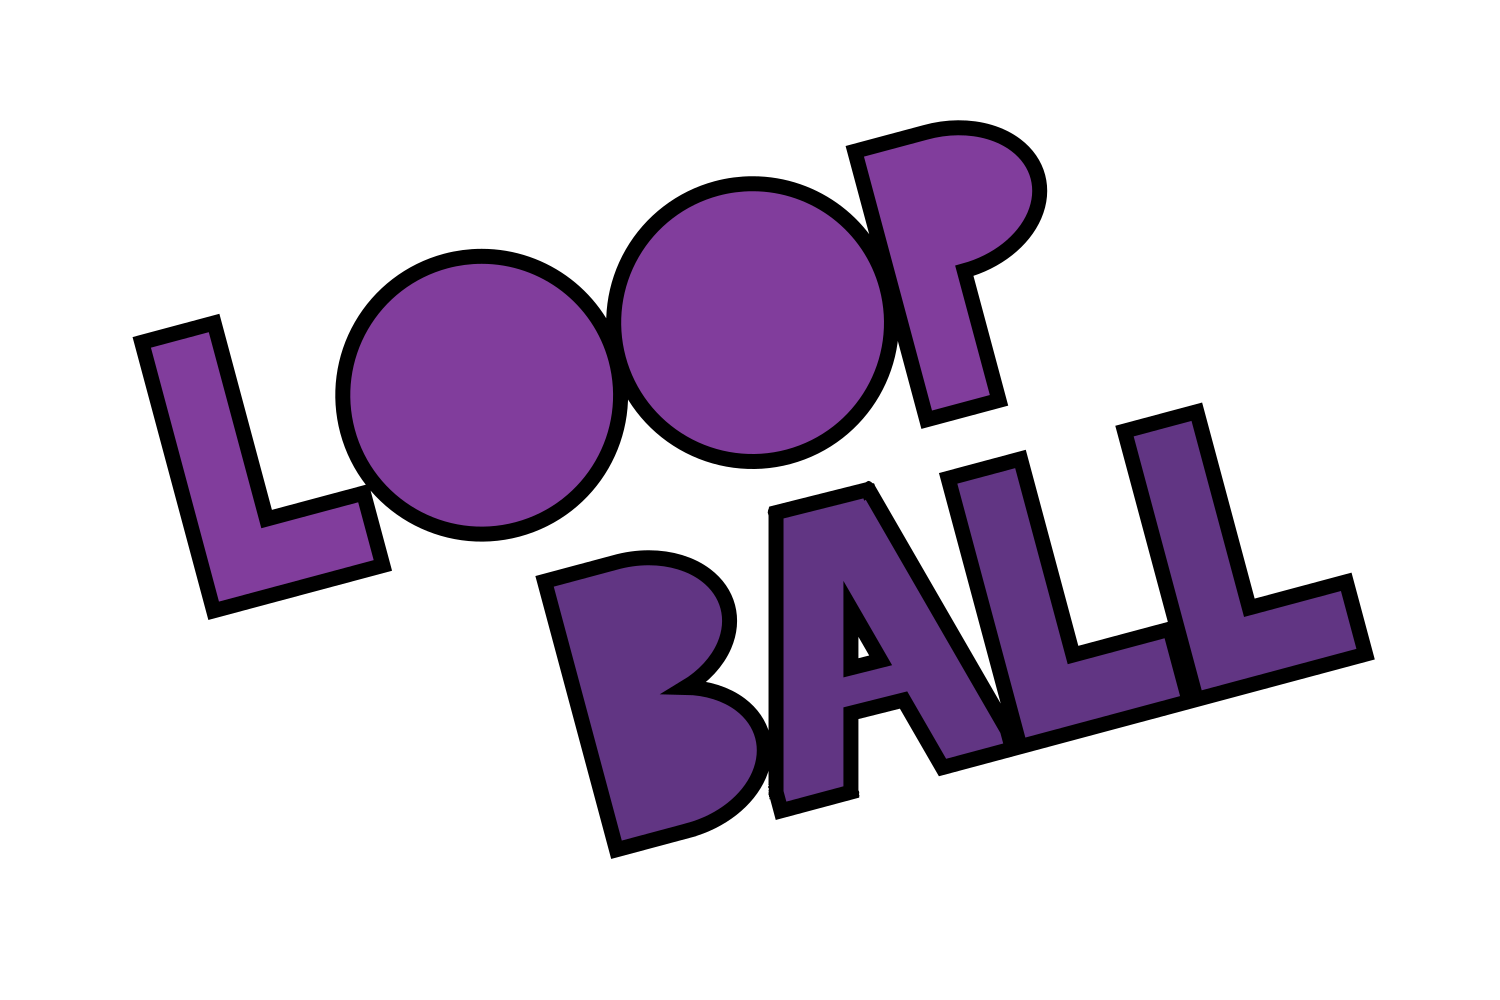 LoopBall